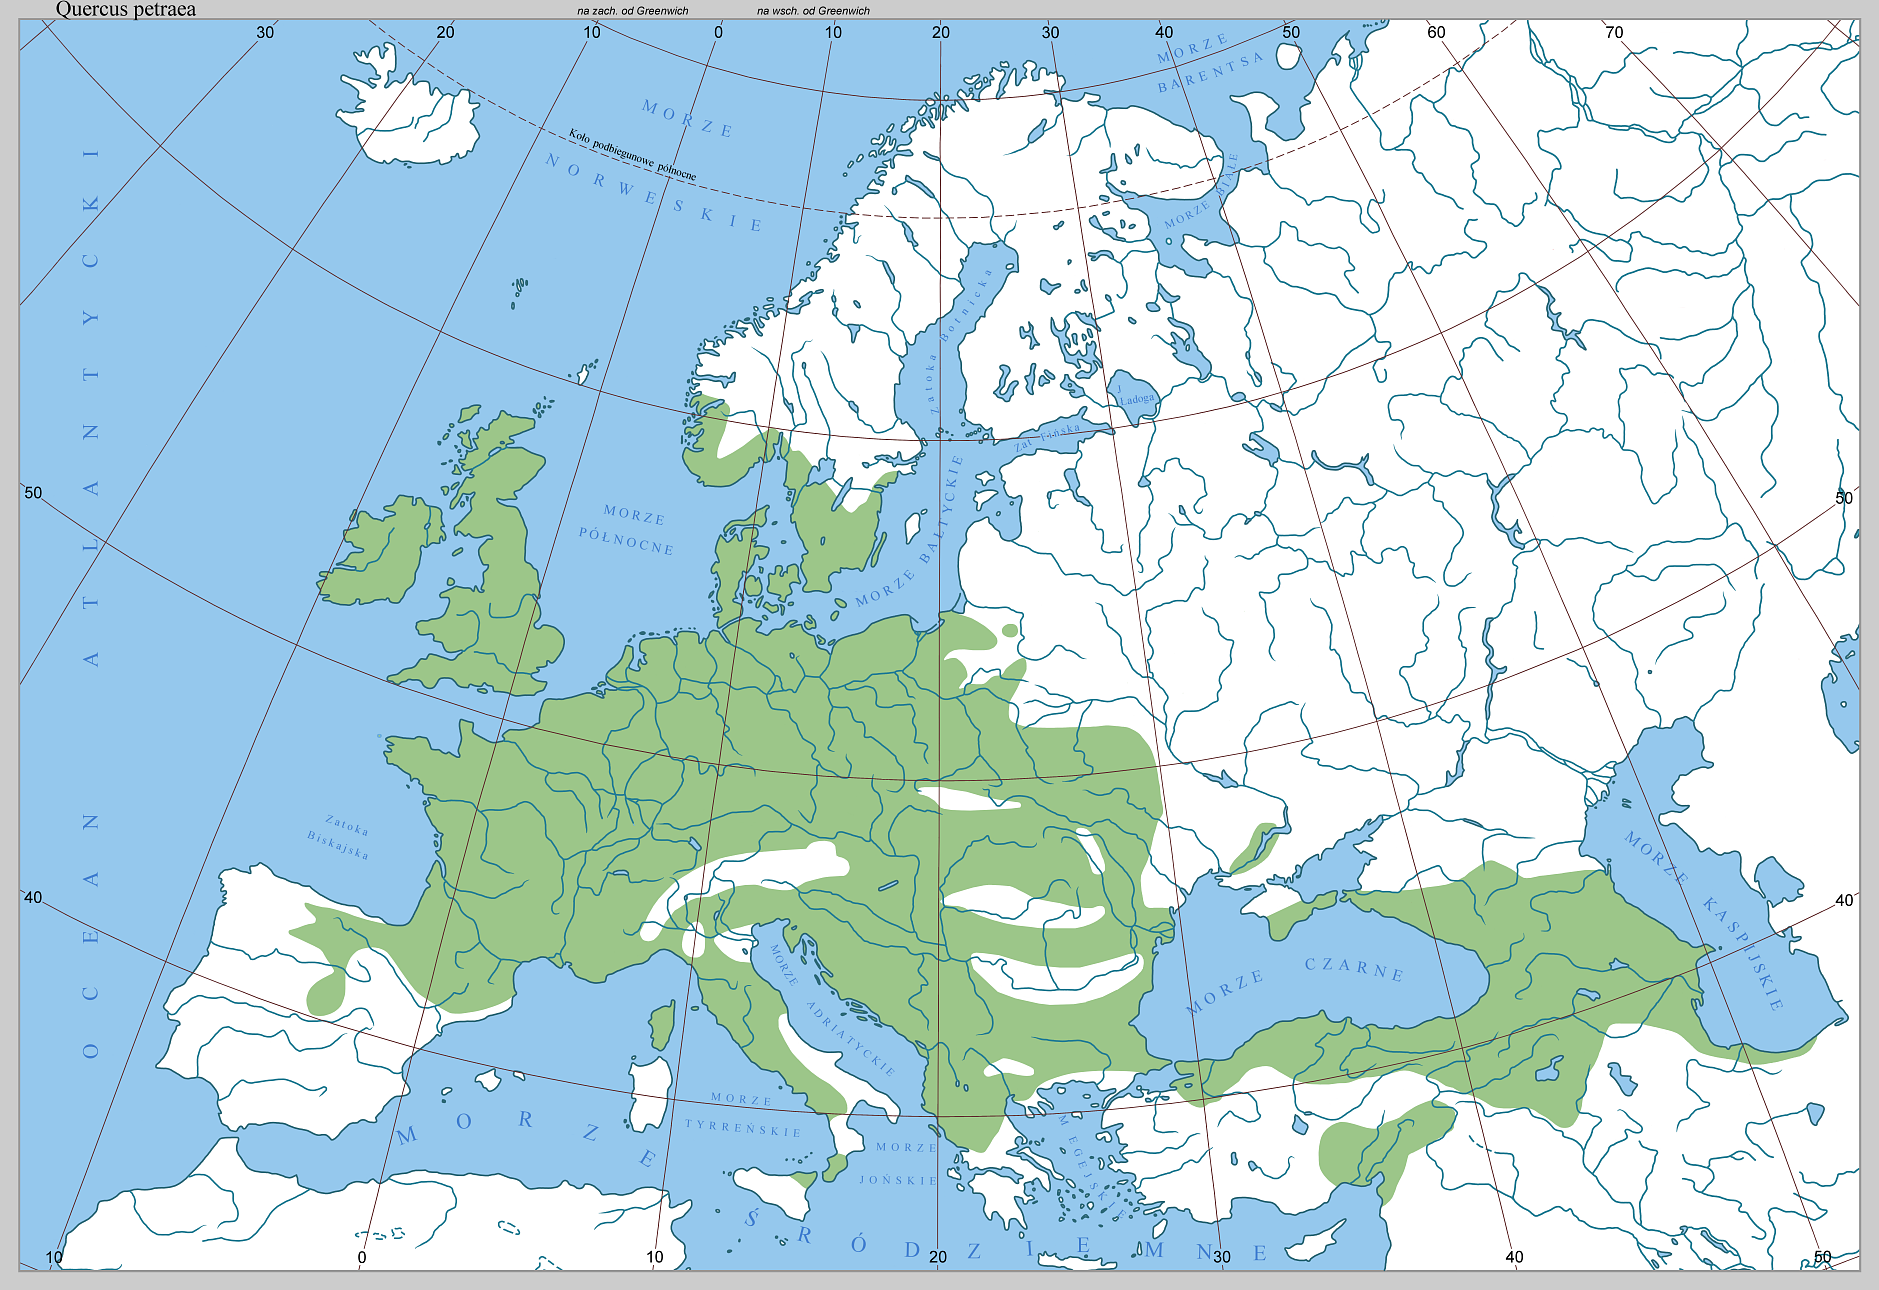 Quercus_petraea_-_range_in_Europe_by_Boratynski.png